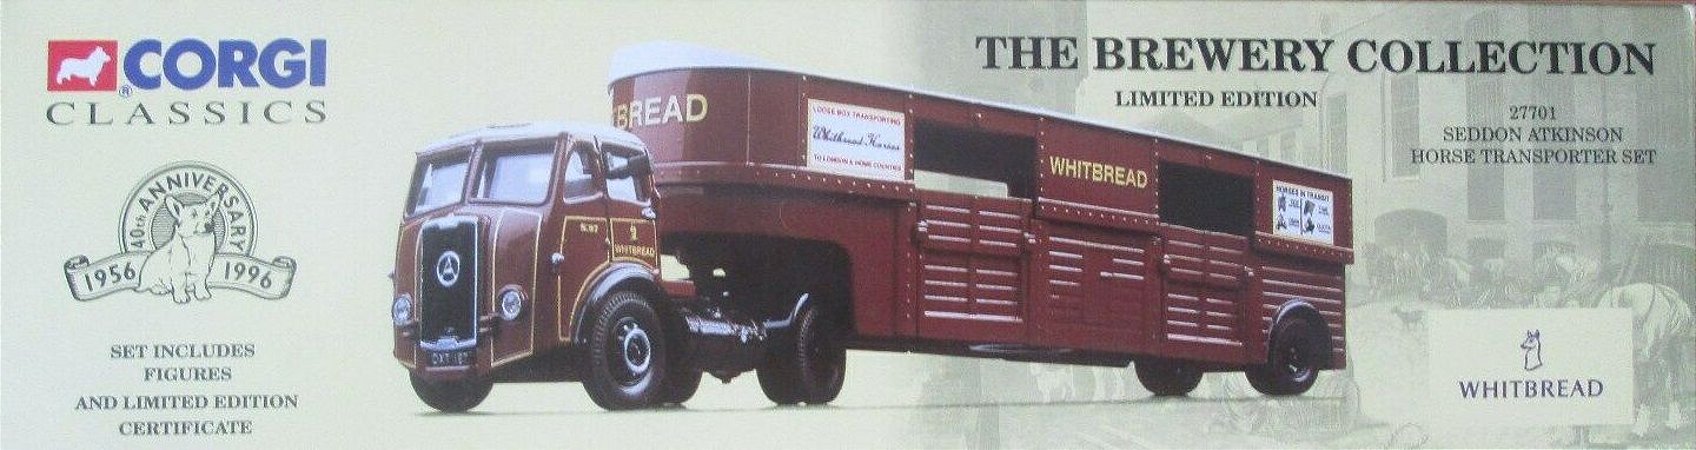 CORGI - Seddon Atkinson Horse Transporter Set - 1/50